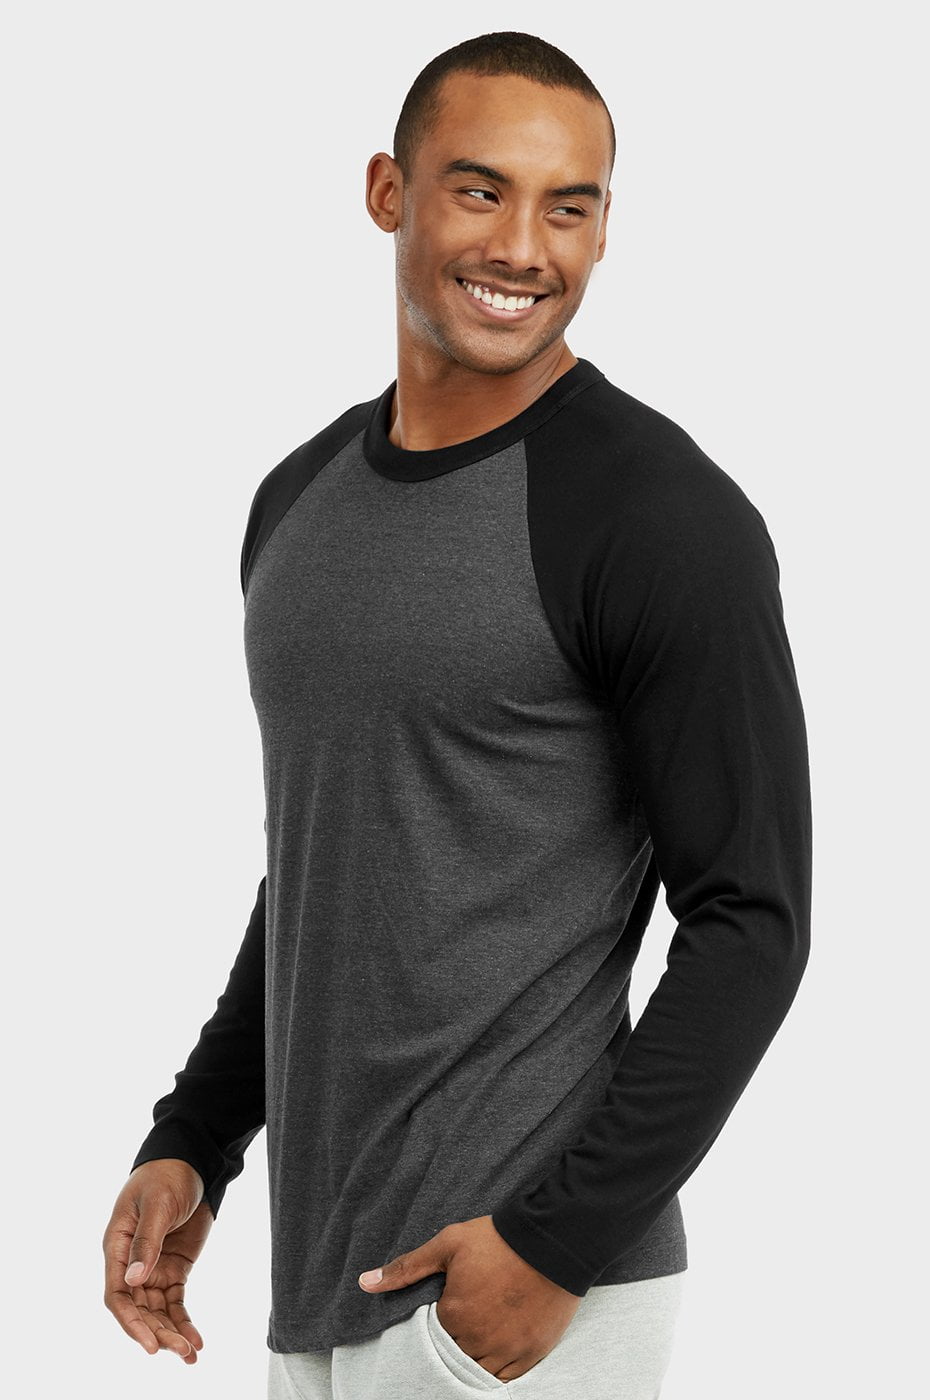 Top Pro Men's Full Length Sleeve Raglan Cotton Baseball Tee Shirt